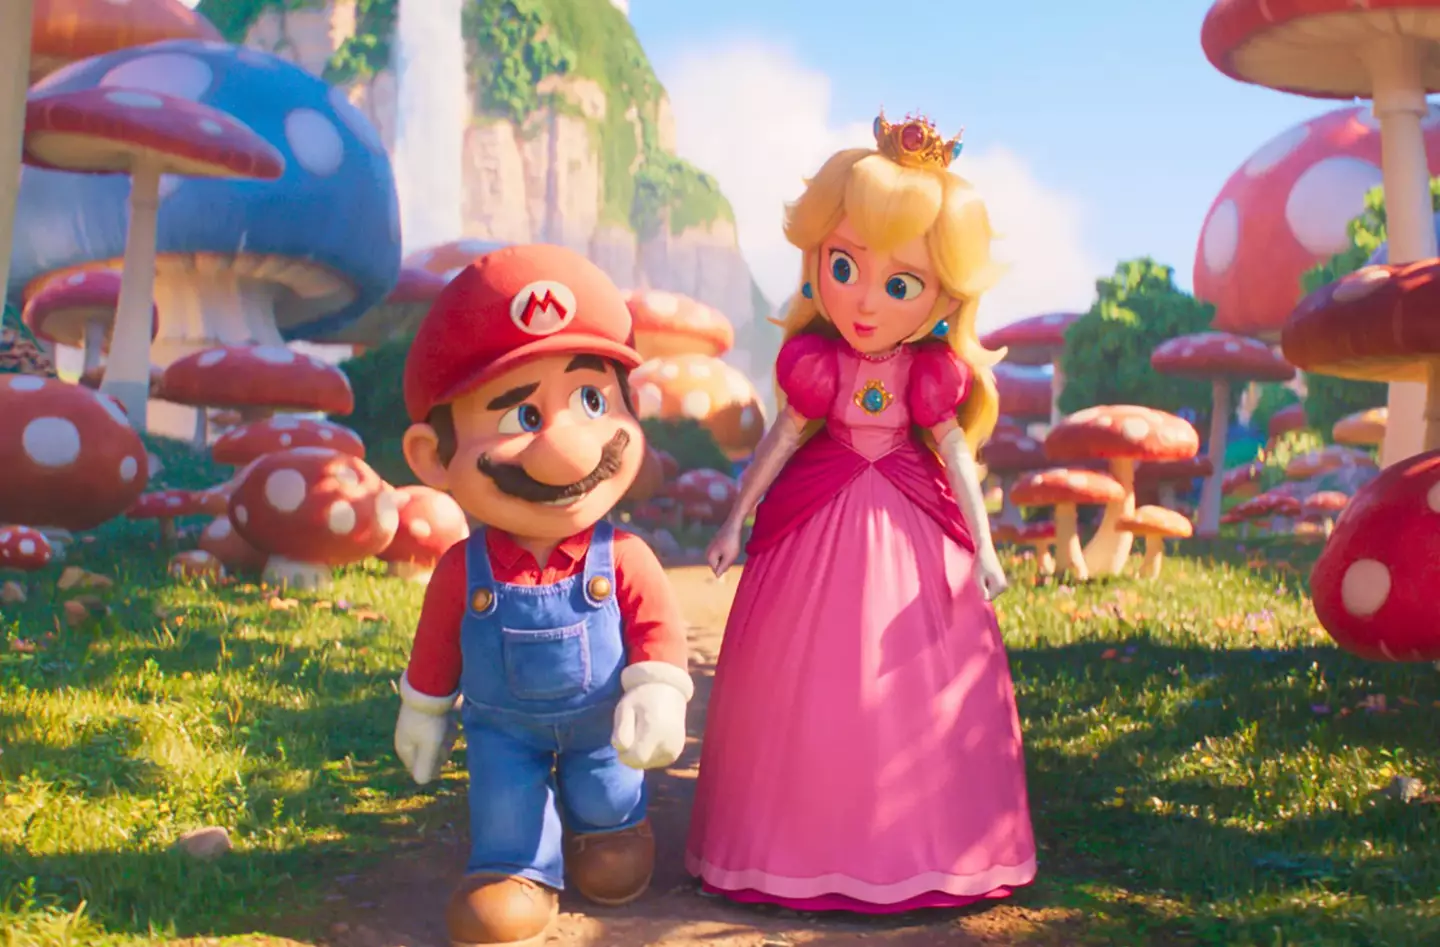 Elon Musk has called Super Mario Bros. Movie critics 'disconnected'.